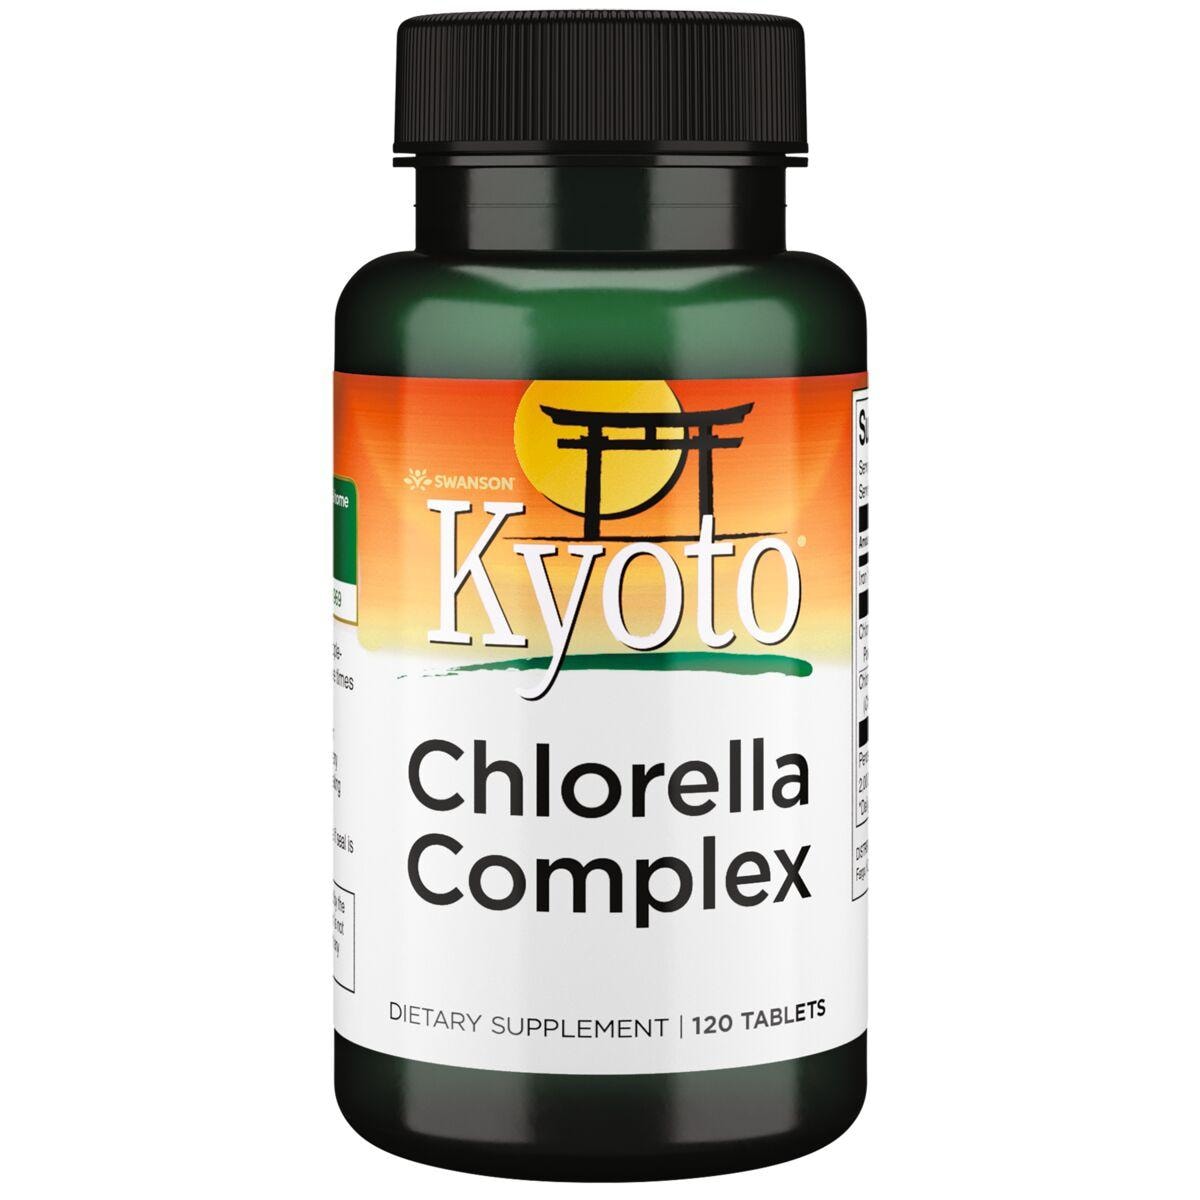 Swanson Kyoto Brand Chlorella Complex Supplement Vitamin | 120 Tabs